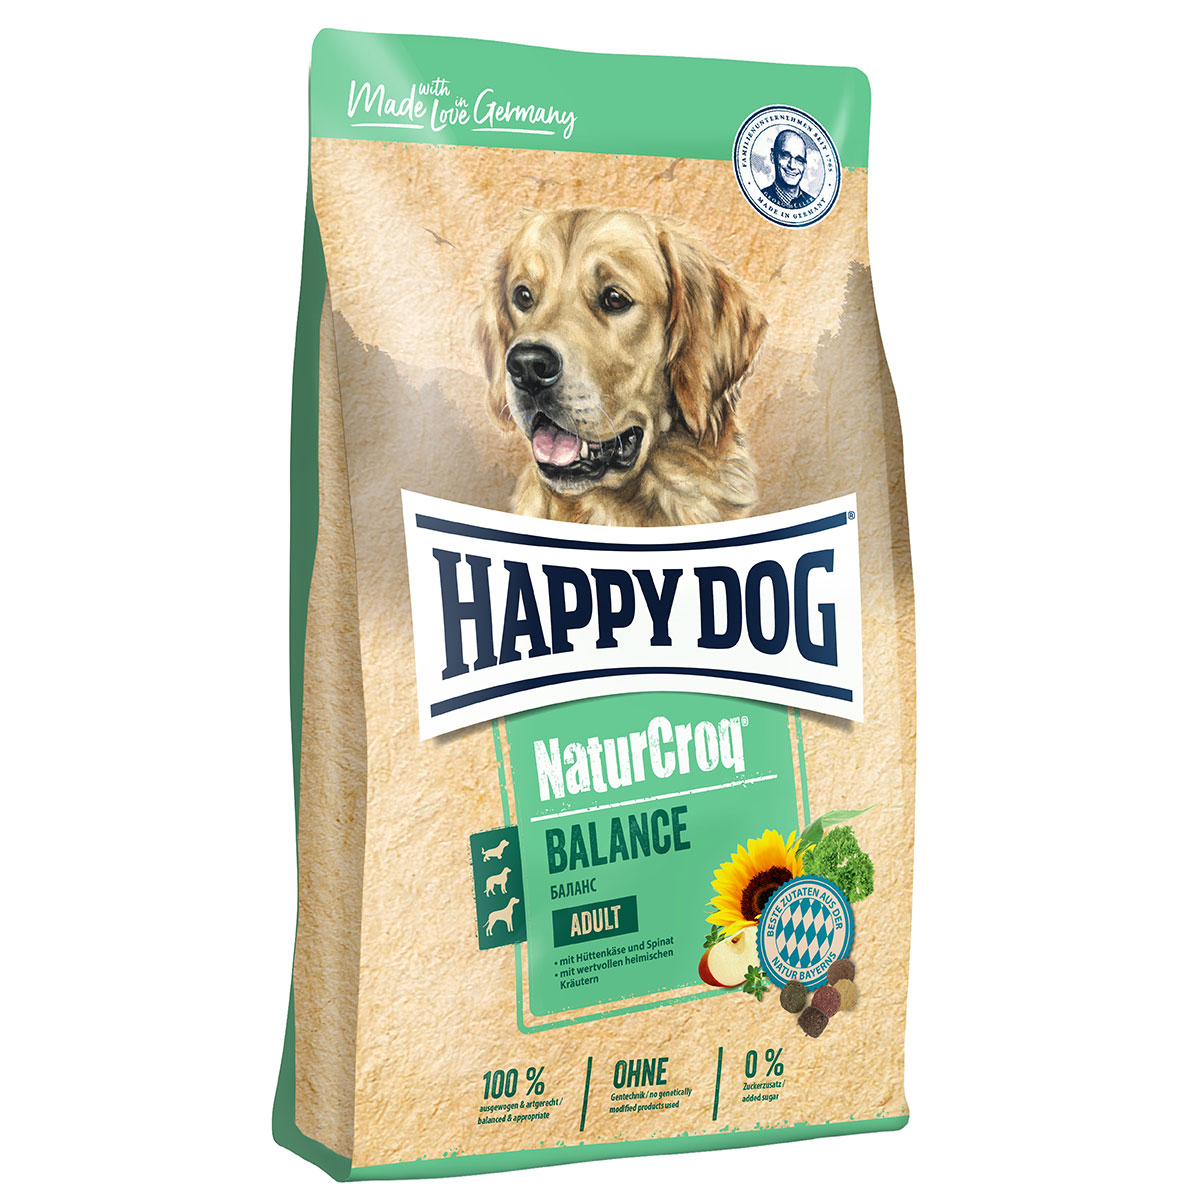 Happy Dog NaturCroq Balance 15kg – mit 18% Rabatt günstig kaufen